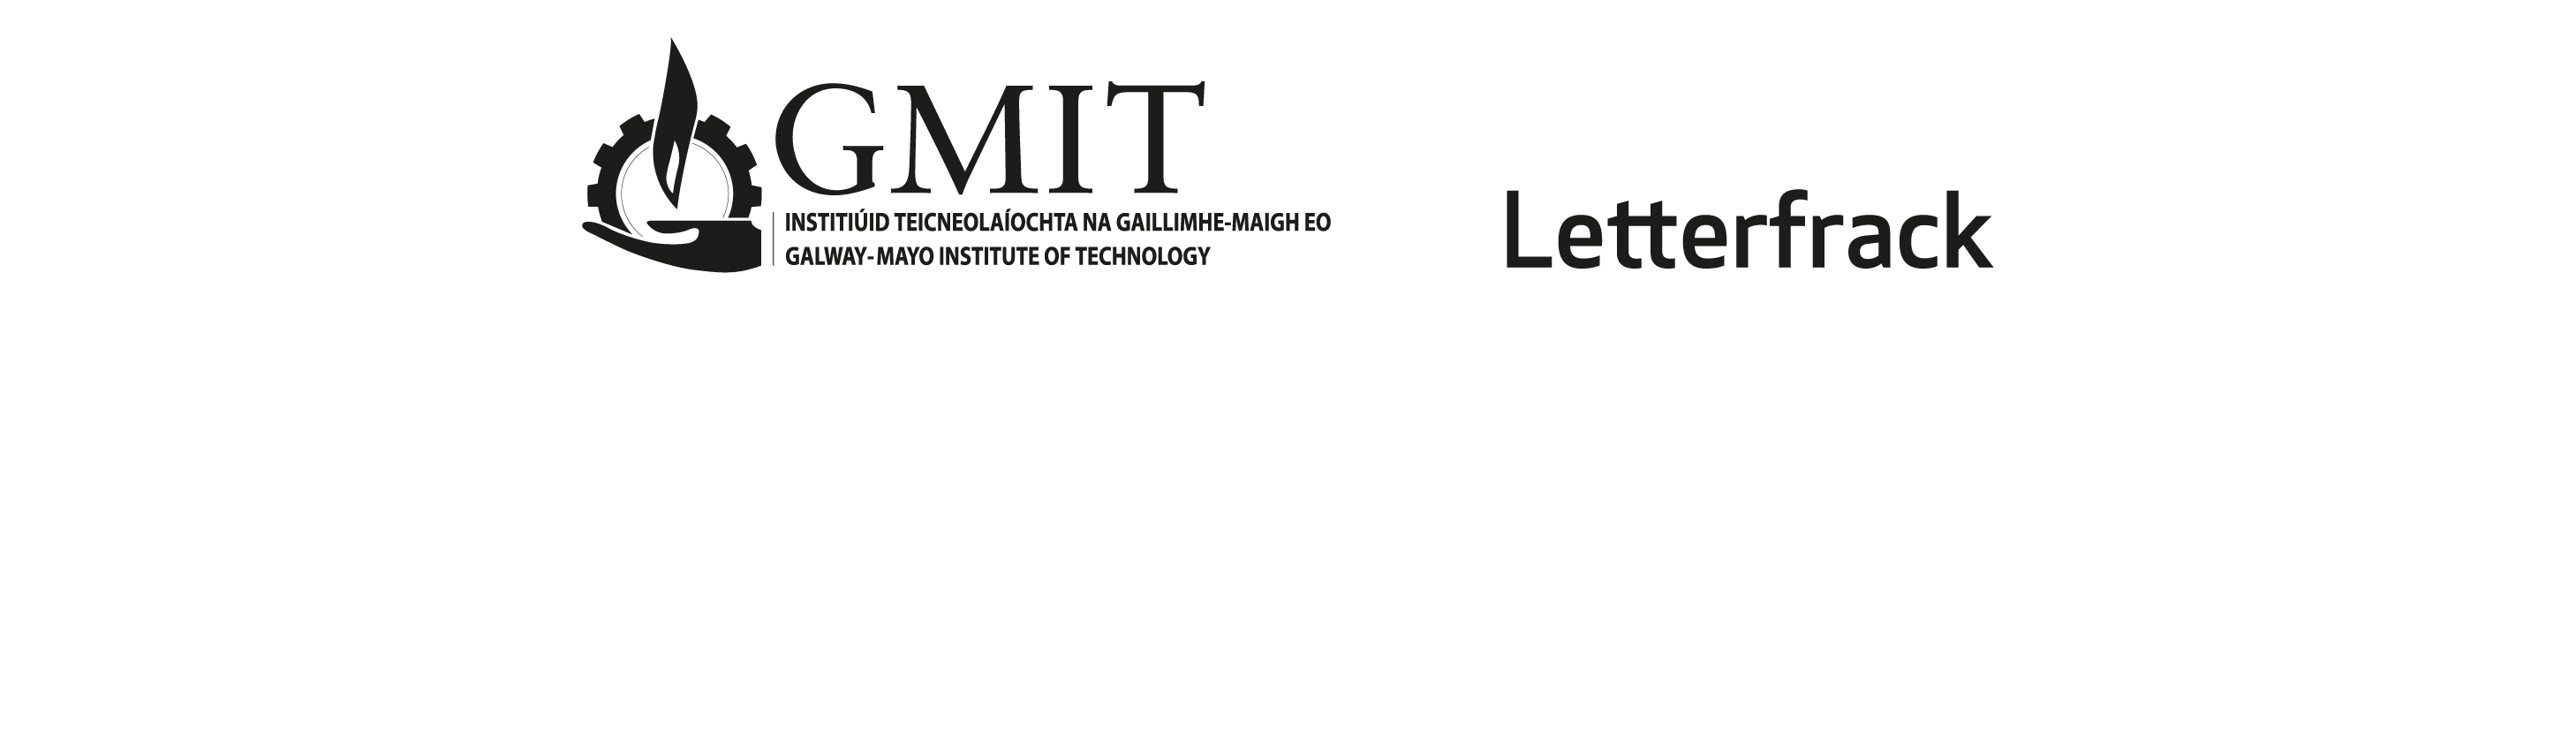 GMIT Letterfrack Logo